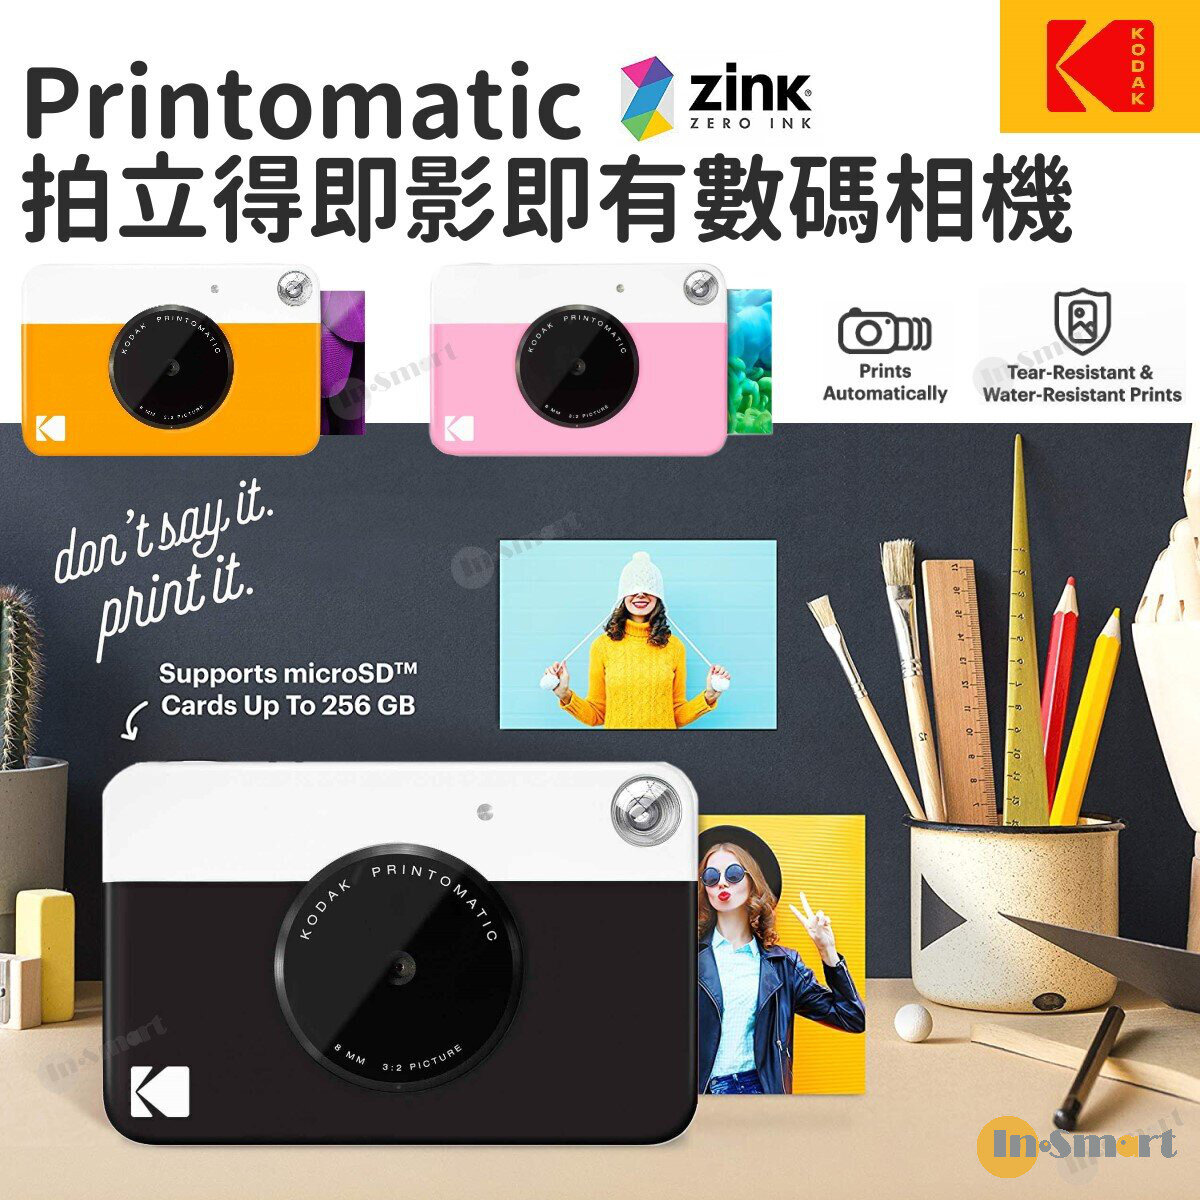 Kodak Printomatic Camera Is All Fashion, No Function